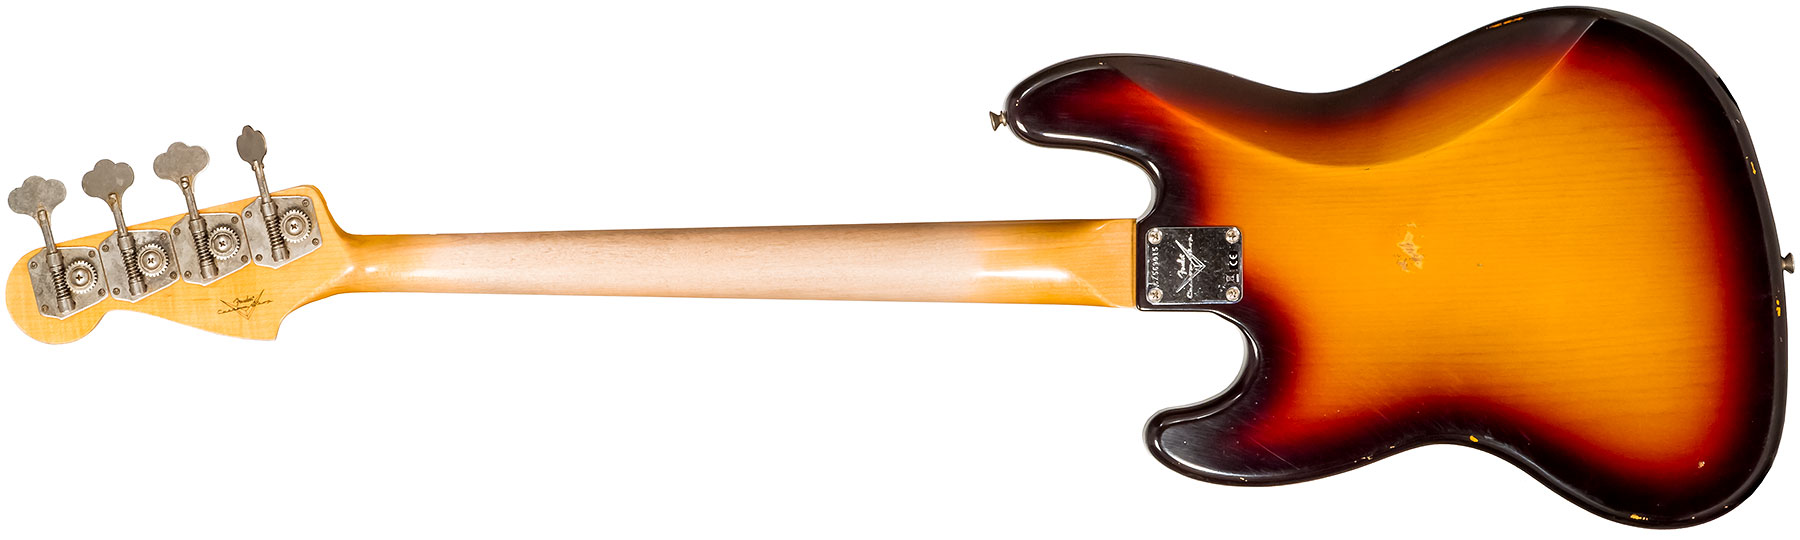 Fender Custom Shop  Jazz Bass 1962 Rw #cz569015 - Relic 3-color Sunburst - Solid body electric bass - Variation 1